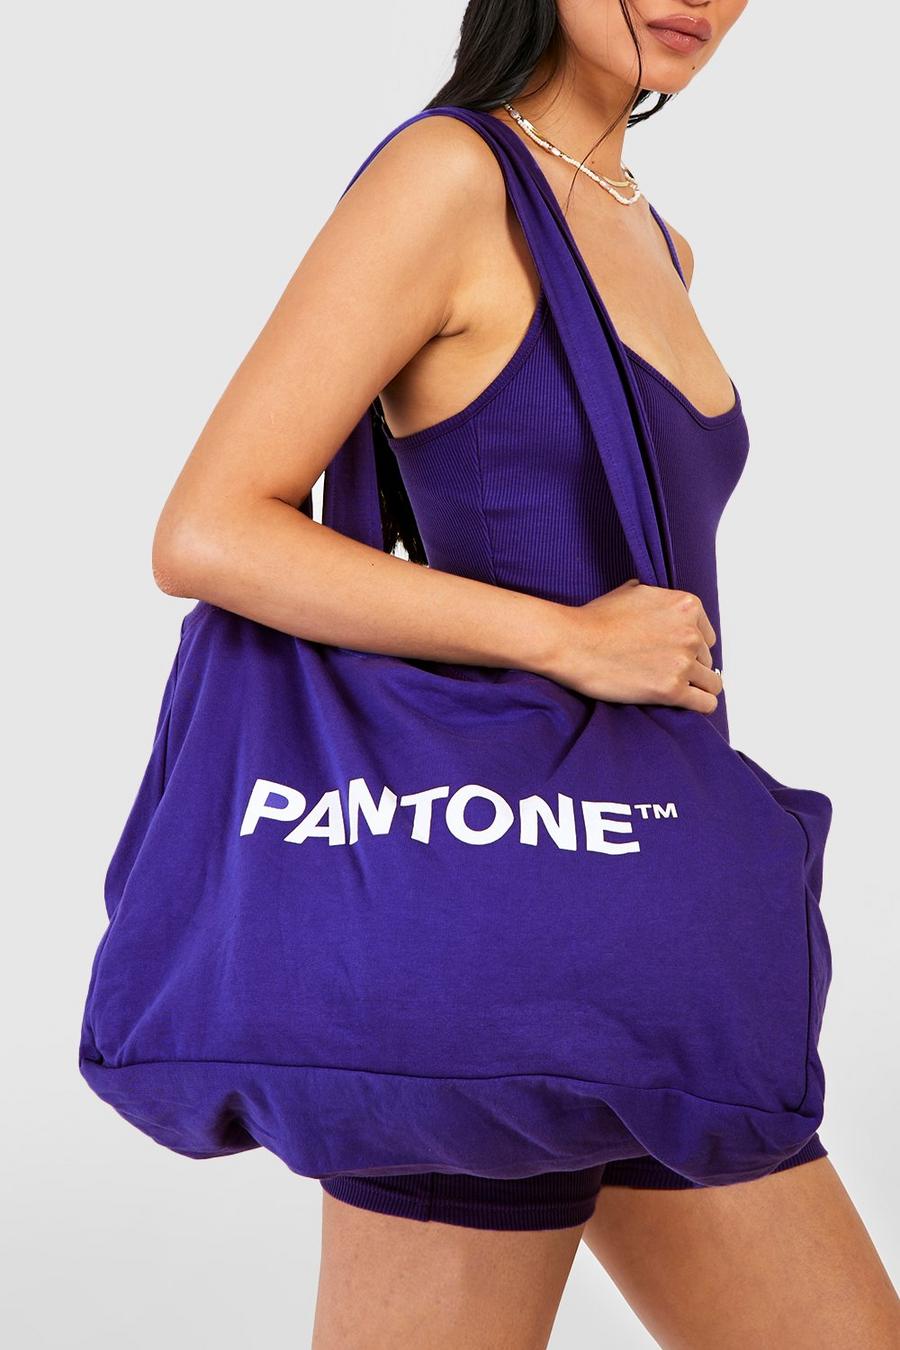 Purple lila Pantone Shopper Tote Bag 